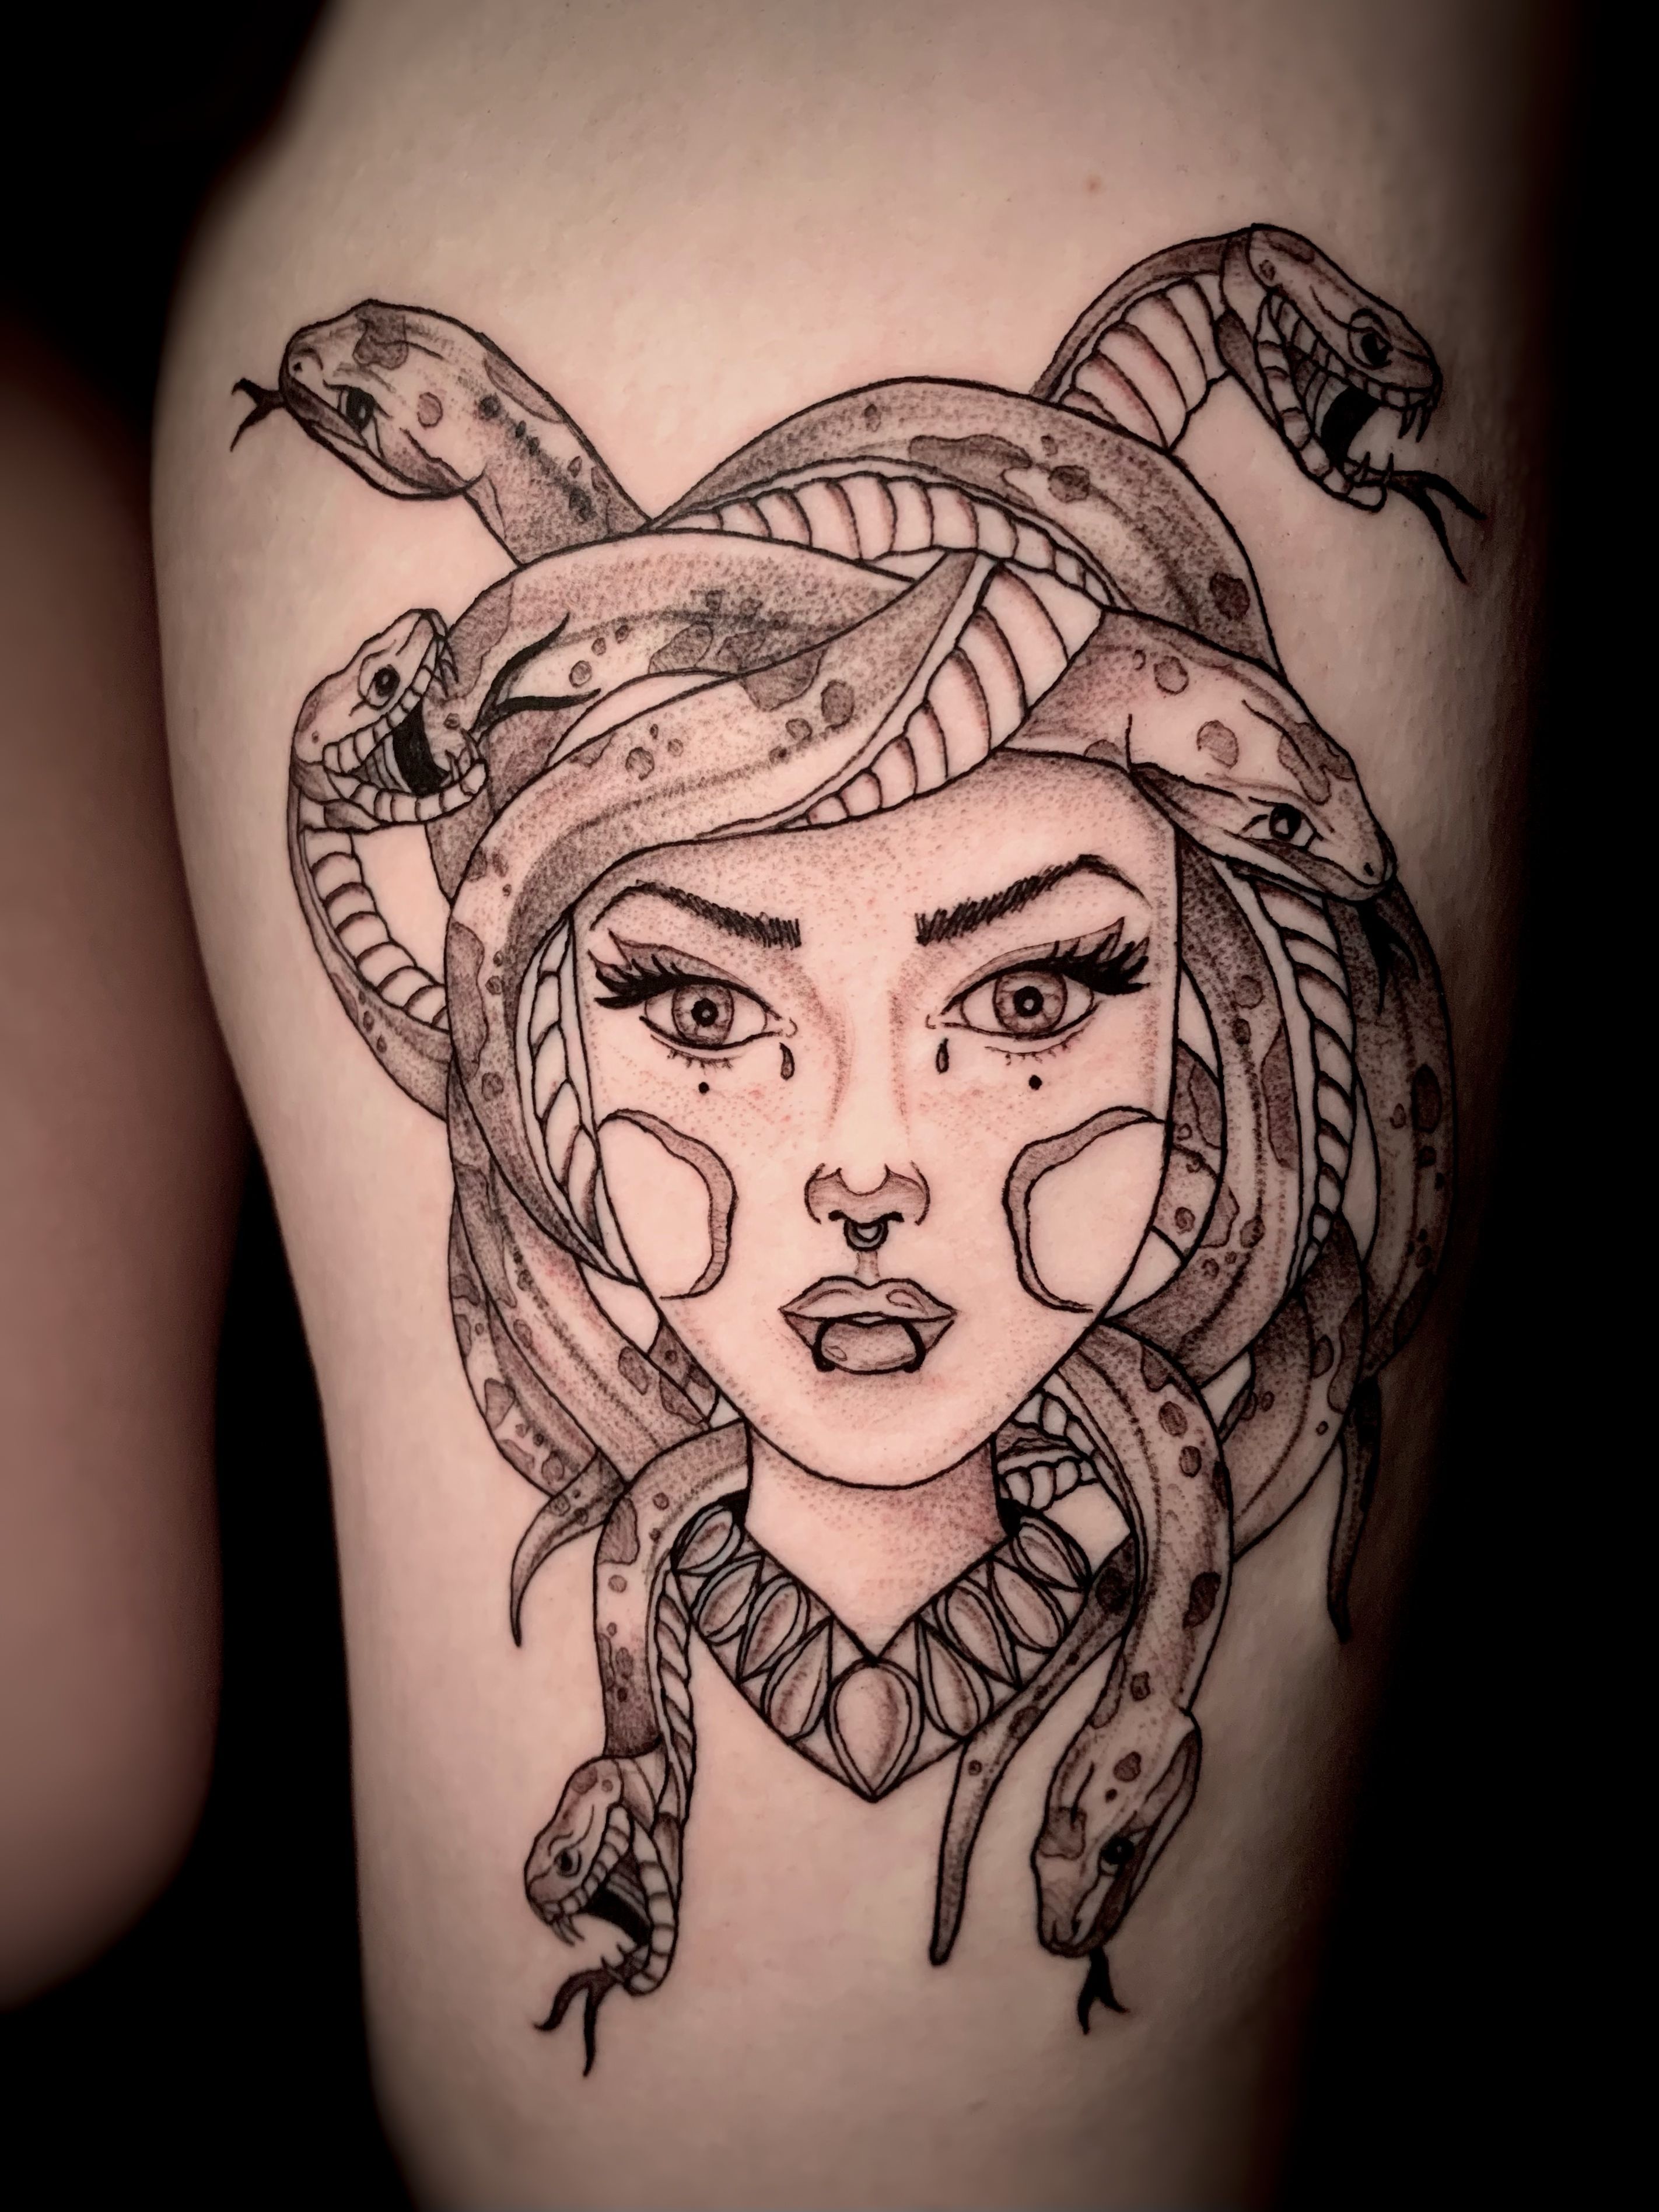 Medusa Juice Lasting Ink Tattoos Body Art Waterproof Temporary Tattoo  Sticker Snake Lady Tatoo Arm Fake Tatto Tatoo Flash Decal - Temporary  Tattoos - AliExpress